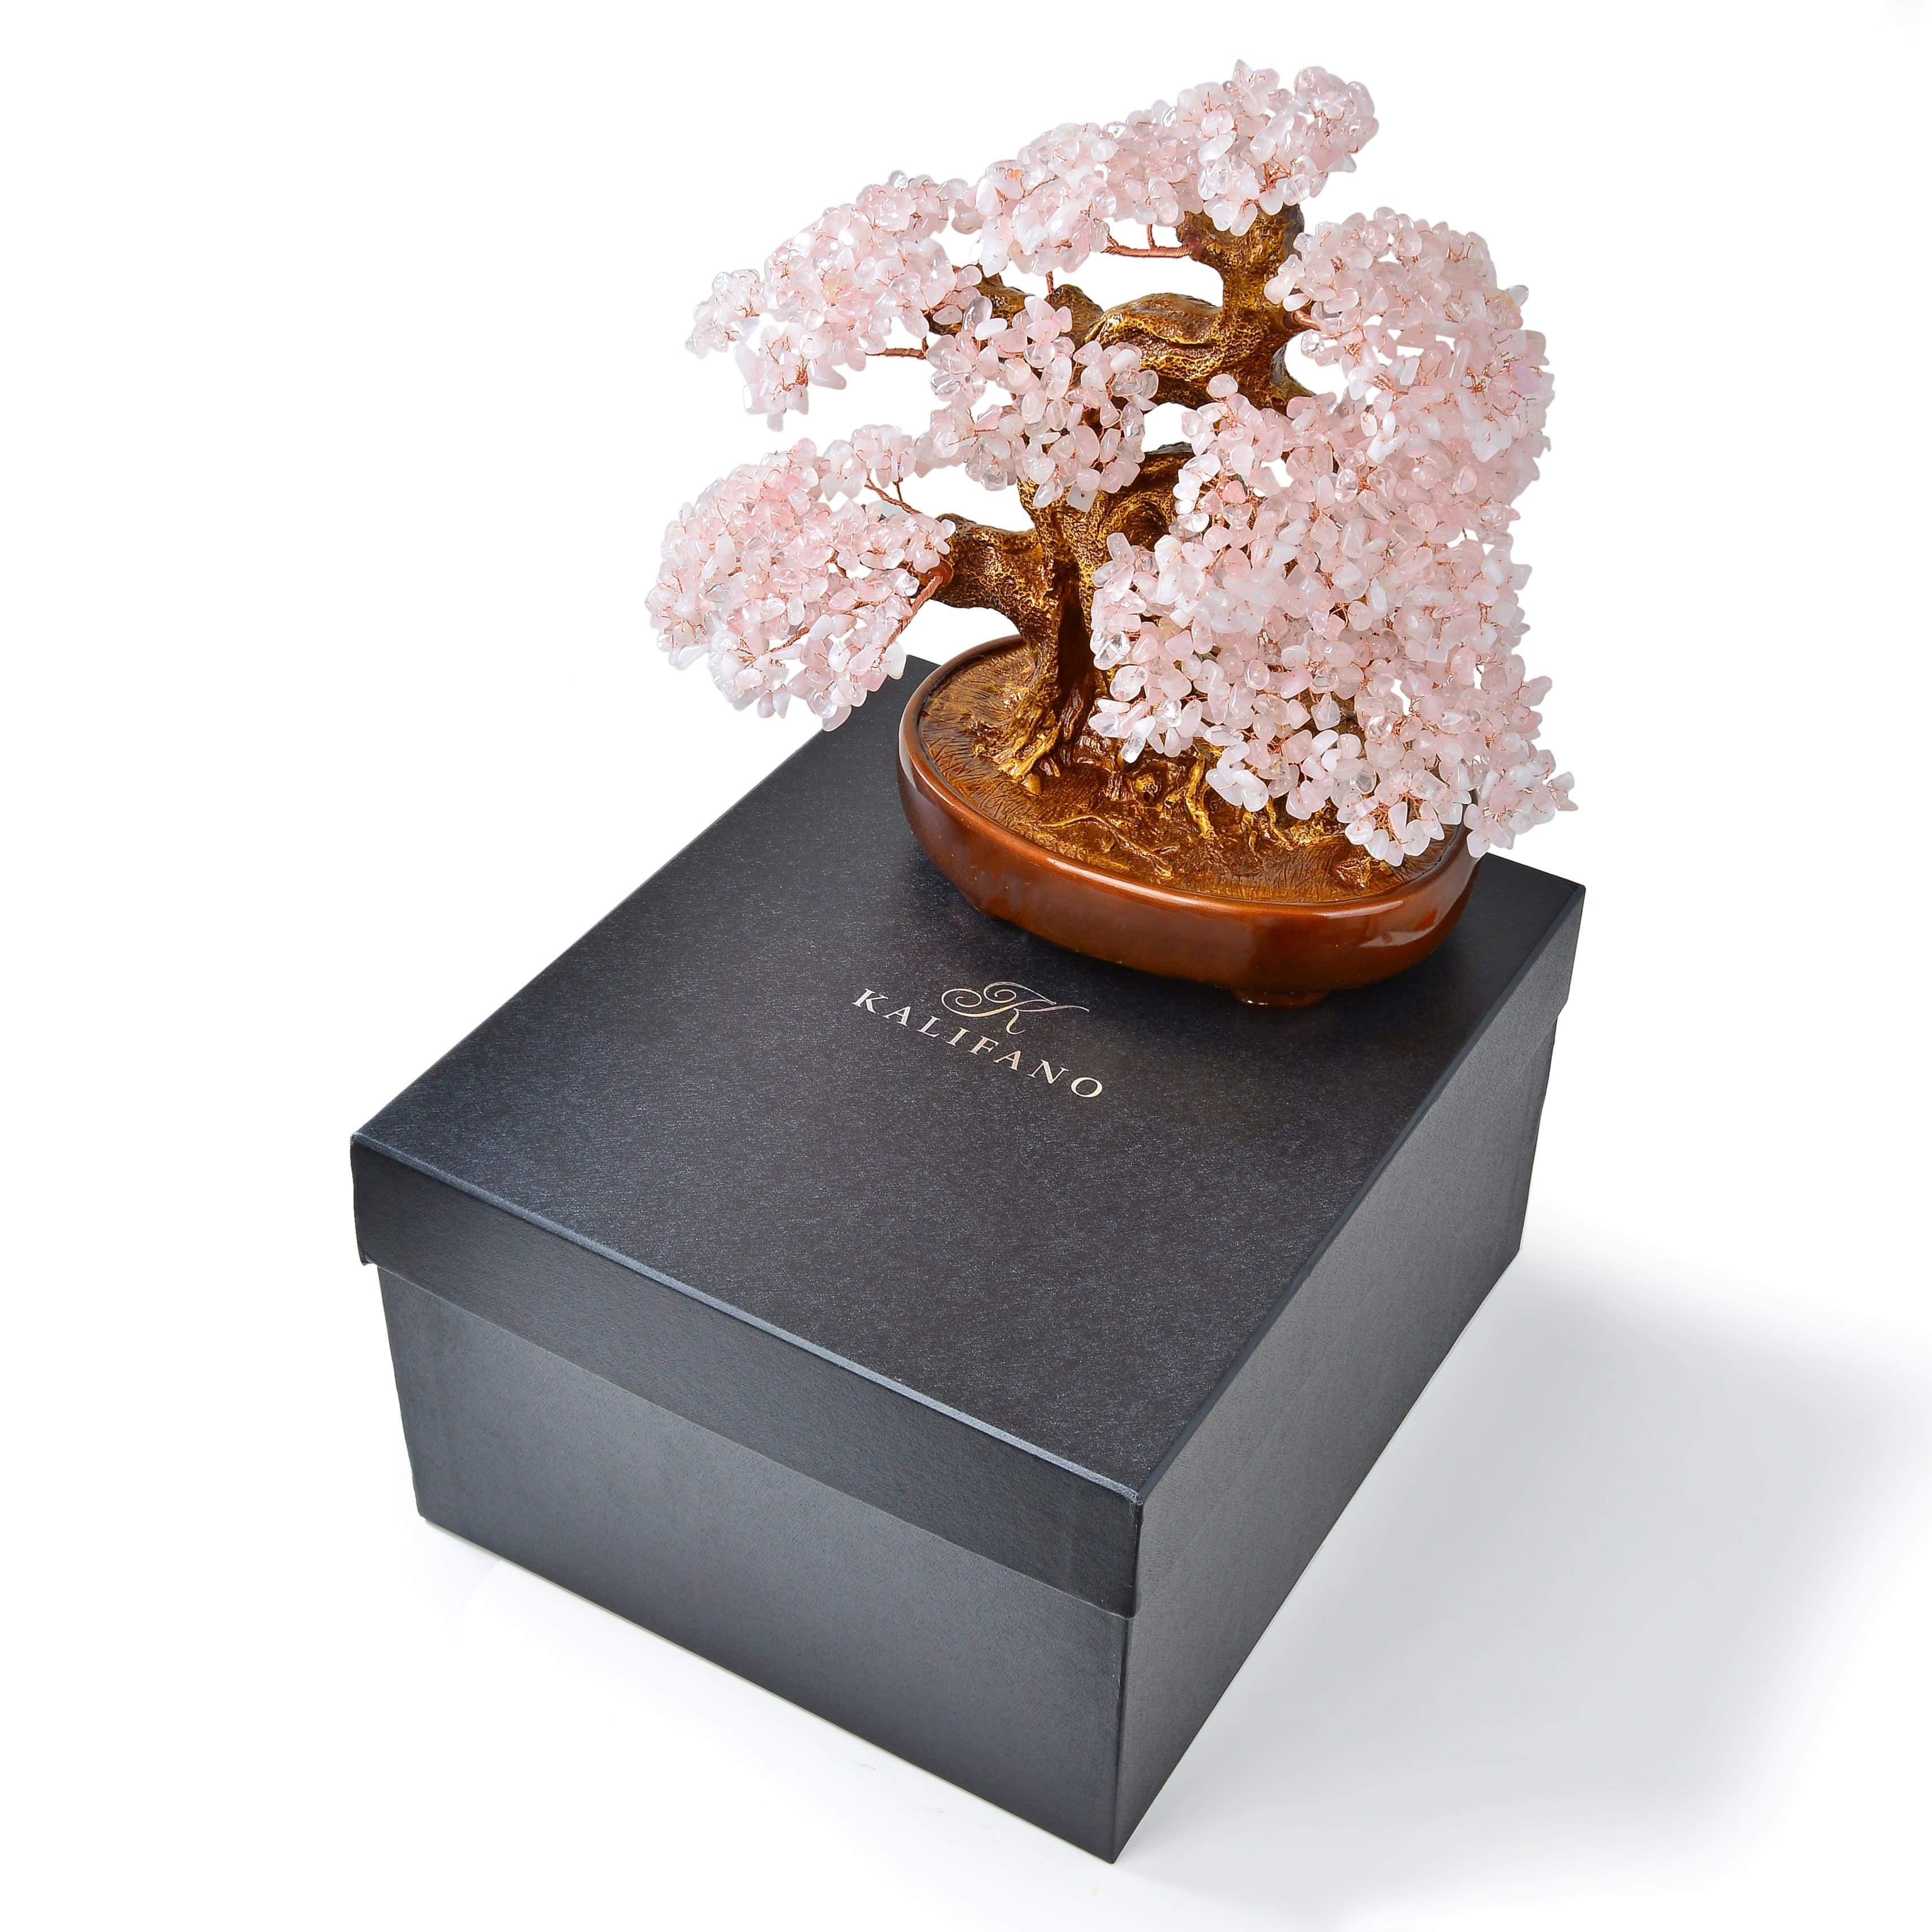 Kalifano Gemstone Trees Rose Quartz Tree of Life on Resin and Wood Base with 1,251 Natural Gemstones K9150N-RQ